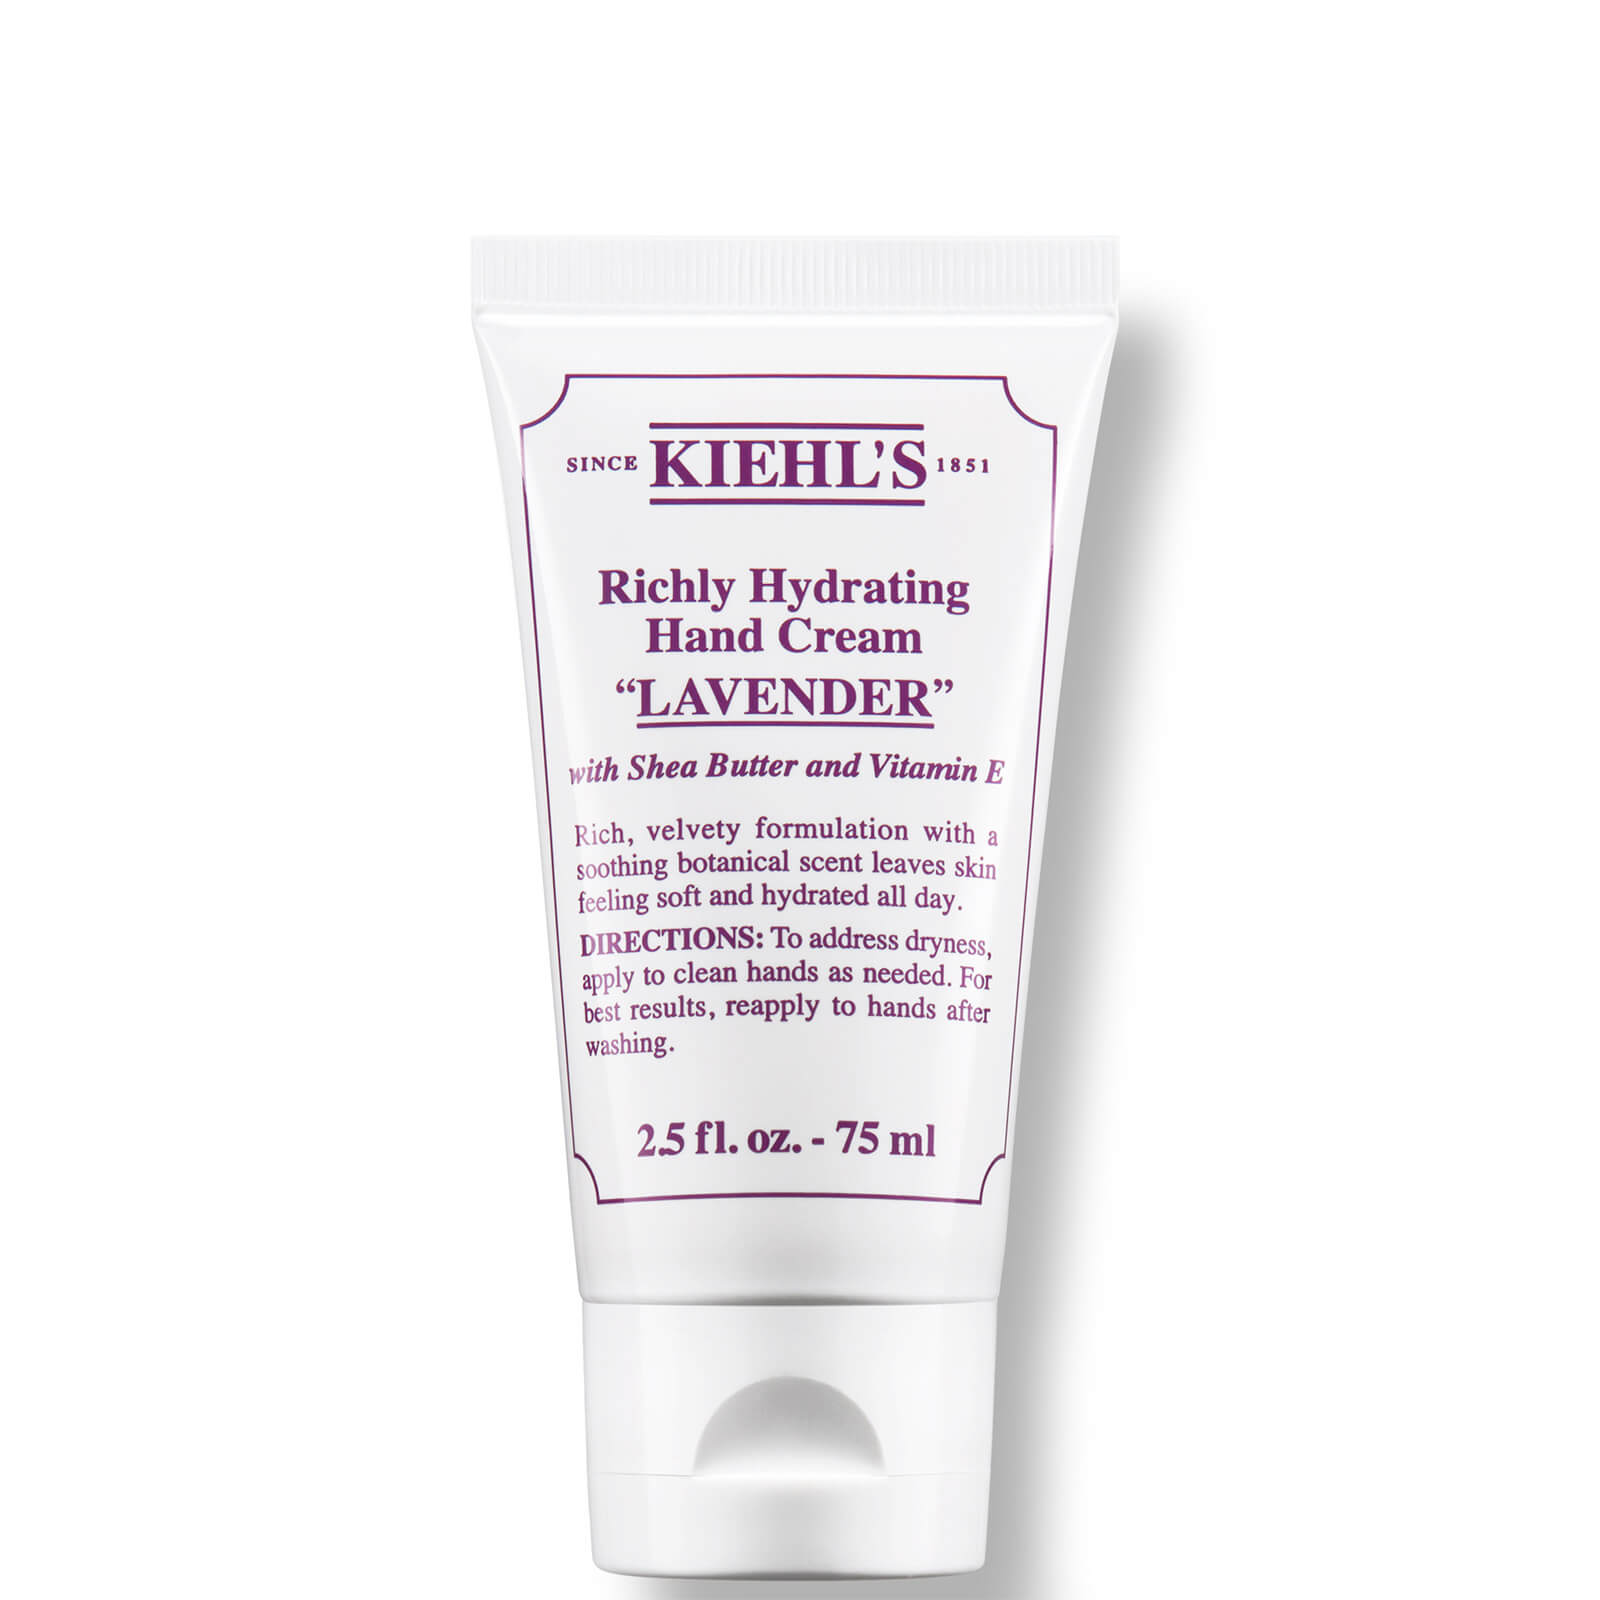 Kiehl's Richly Hydrating Hand Cream 75ml (Various Options) - Lavender